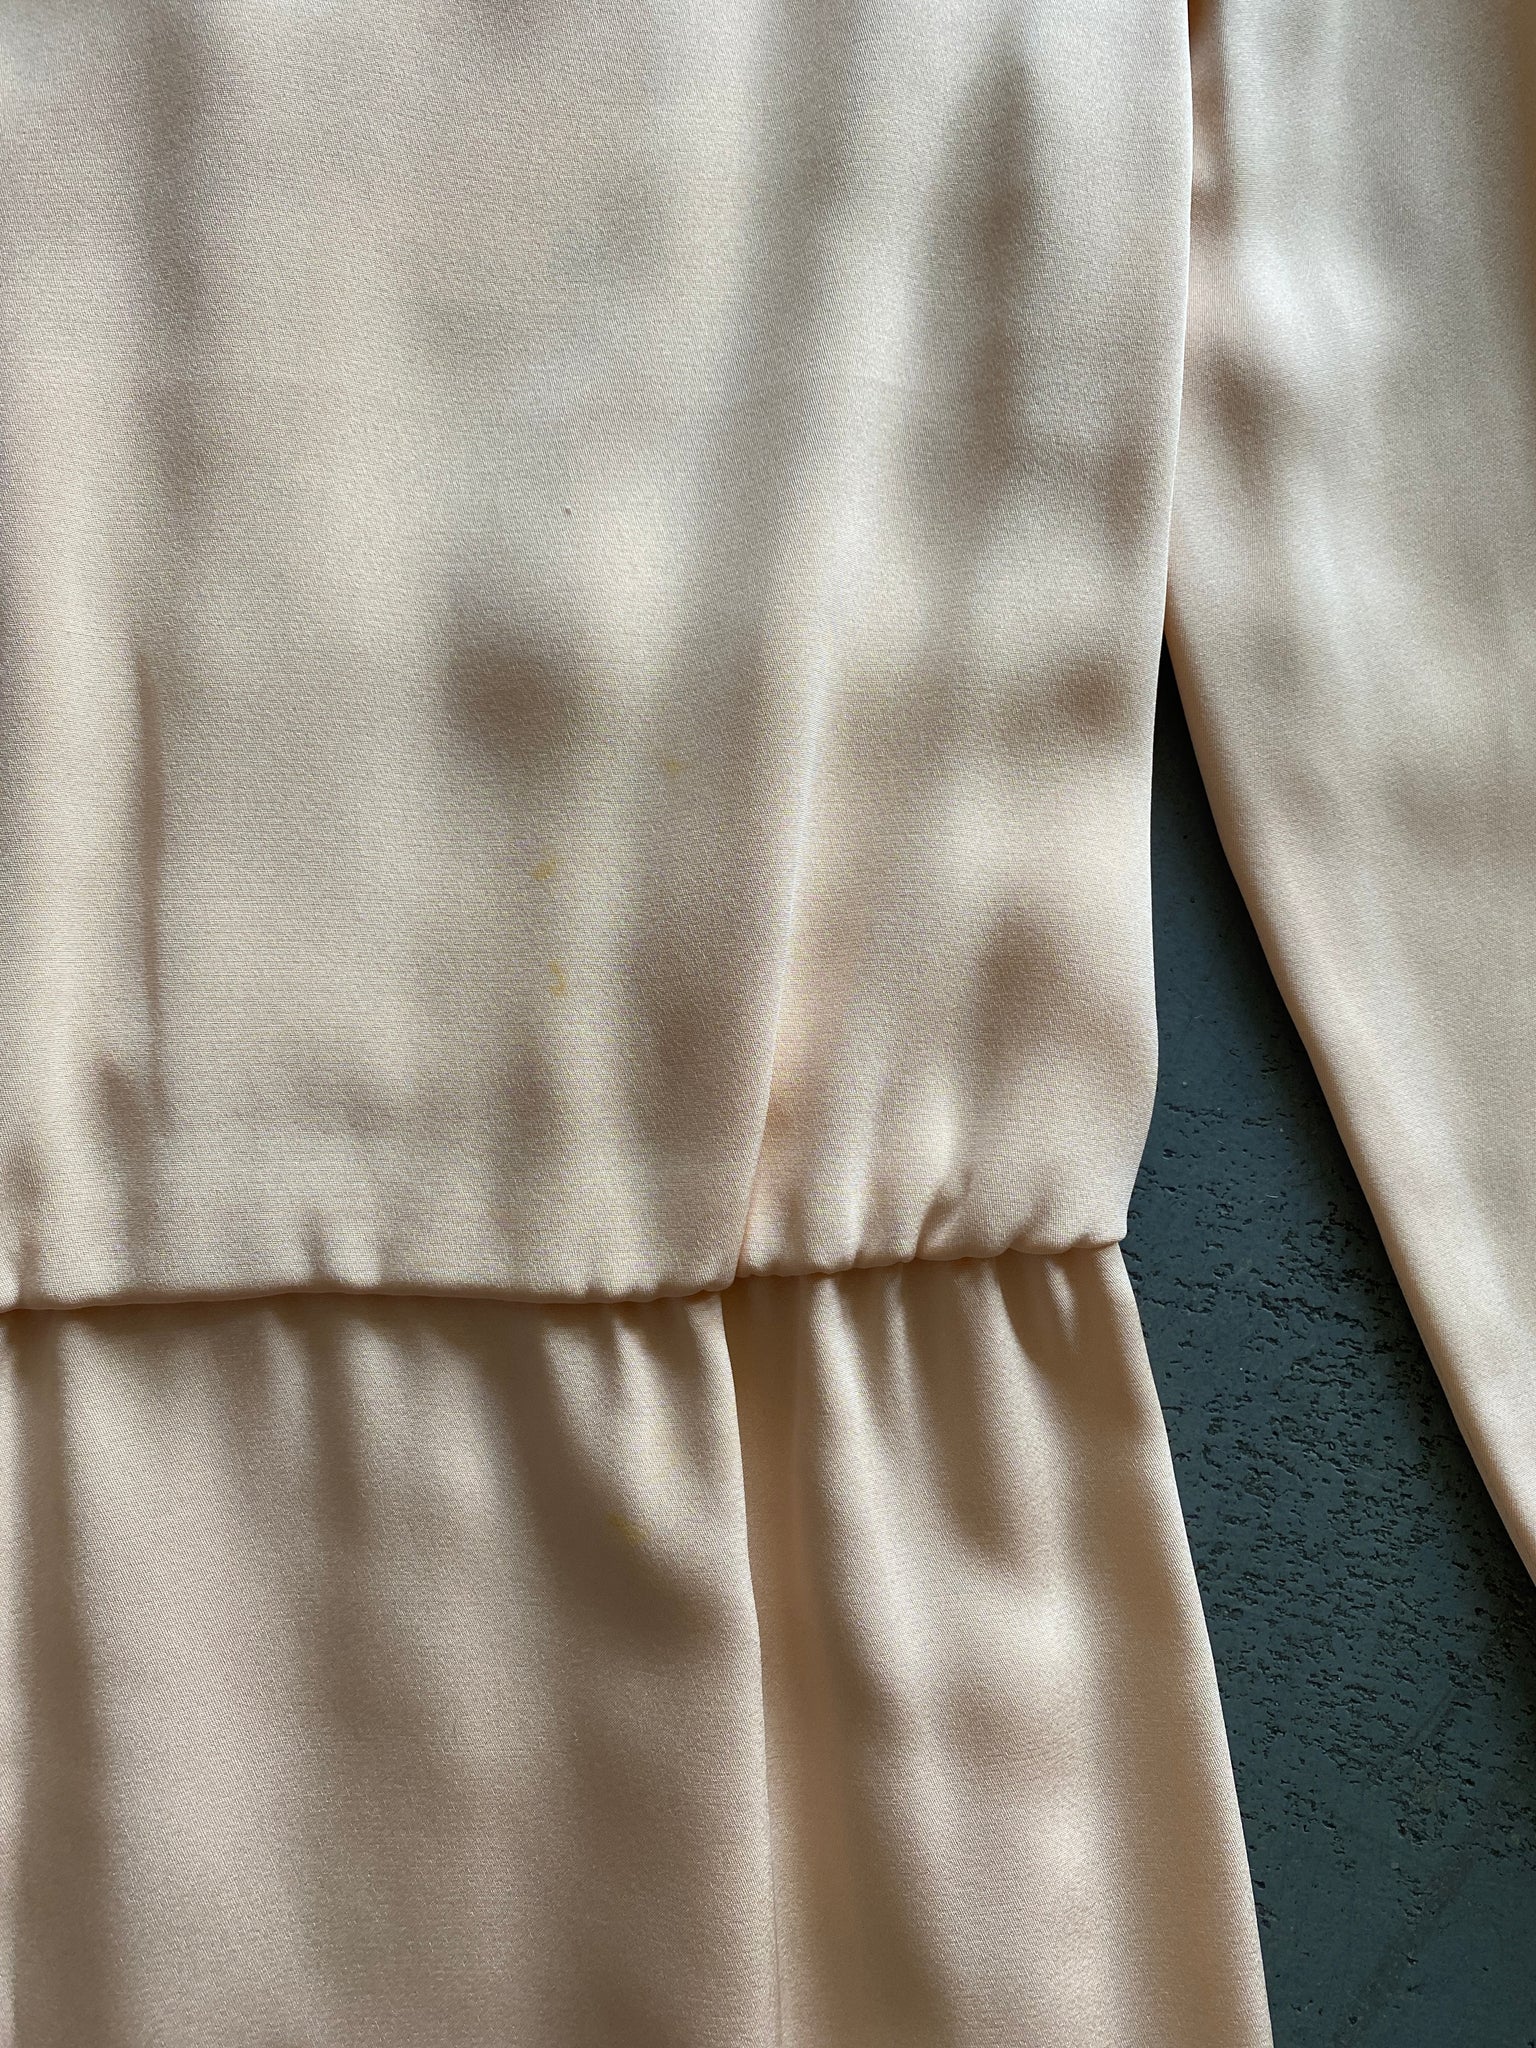 Vintage Silk Dianne Phelps Peach Dress (S)